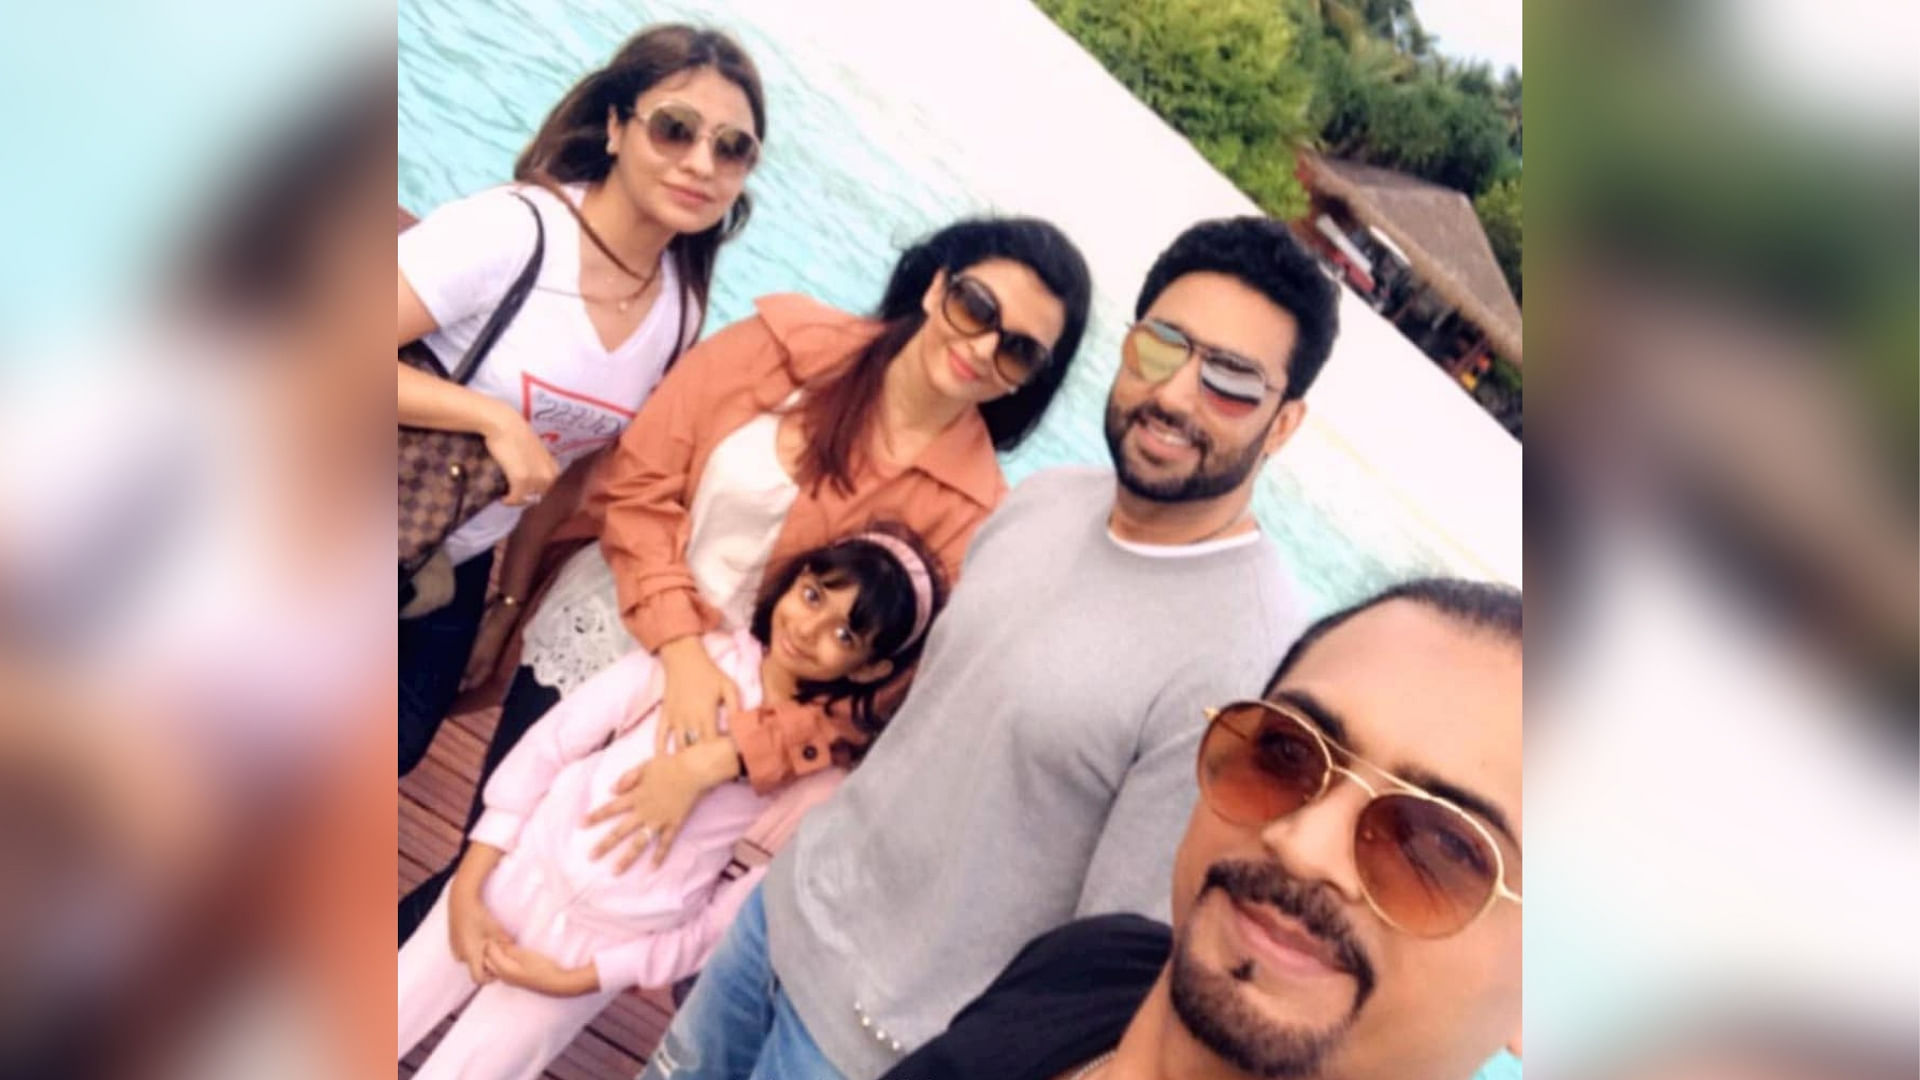 Abhishek Bachchan, Aishwarya Rai and their daughter Aaradhya pose with fans in Maldives.